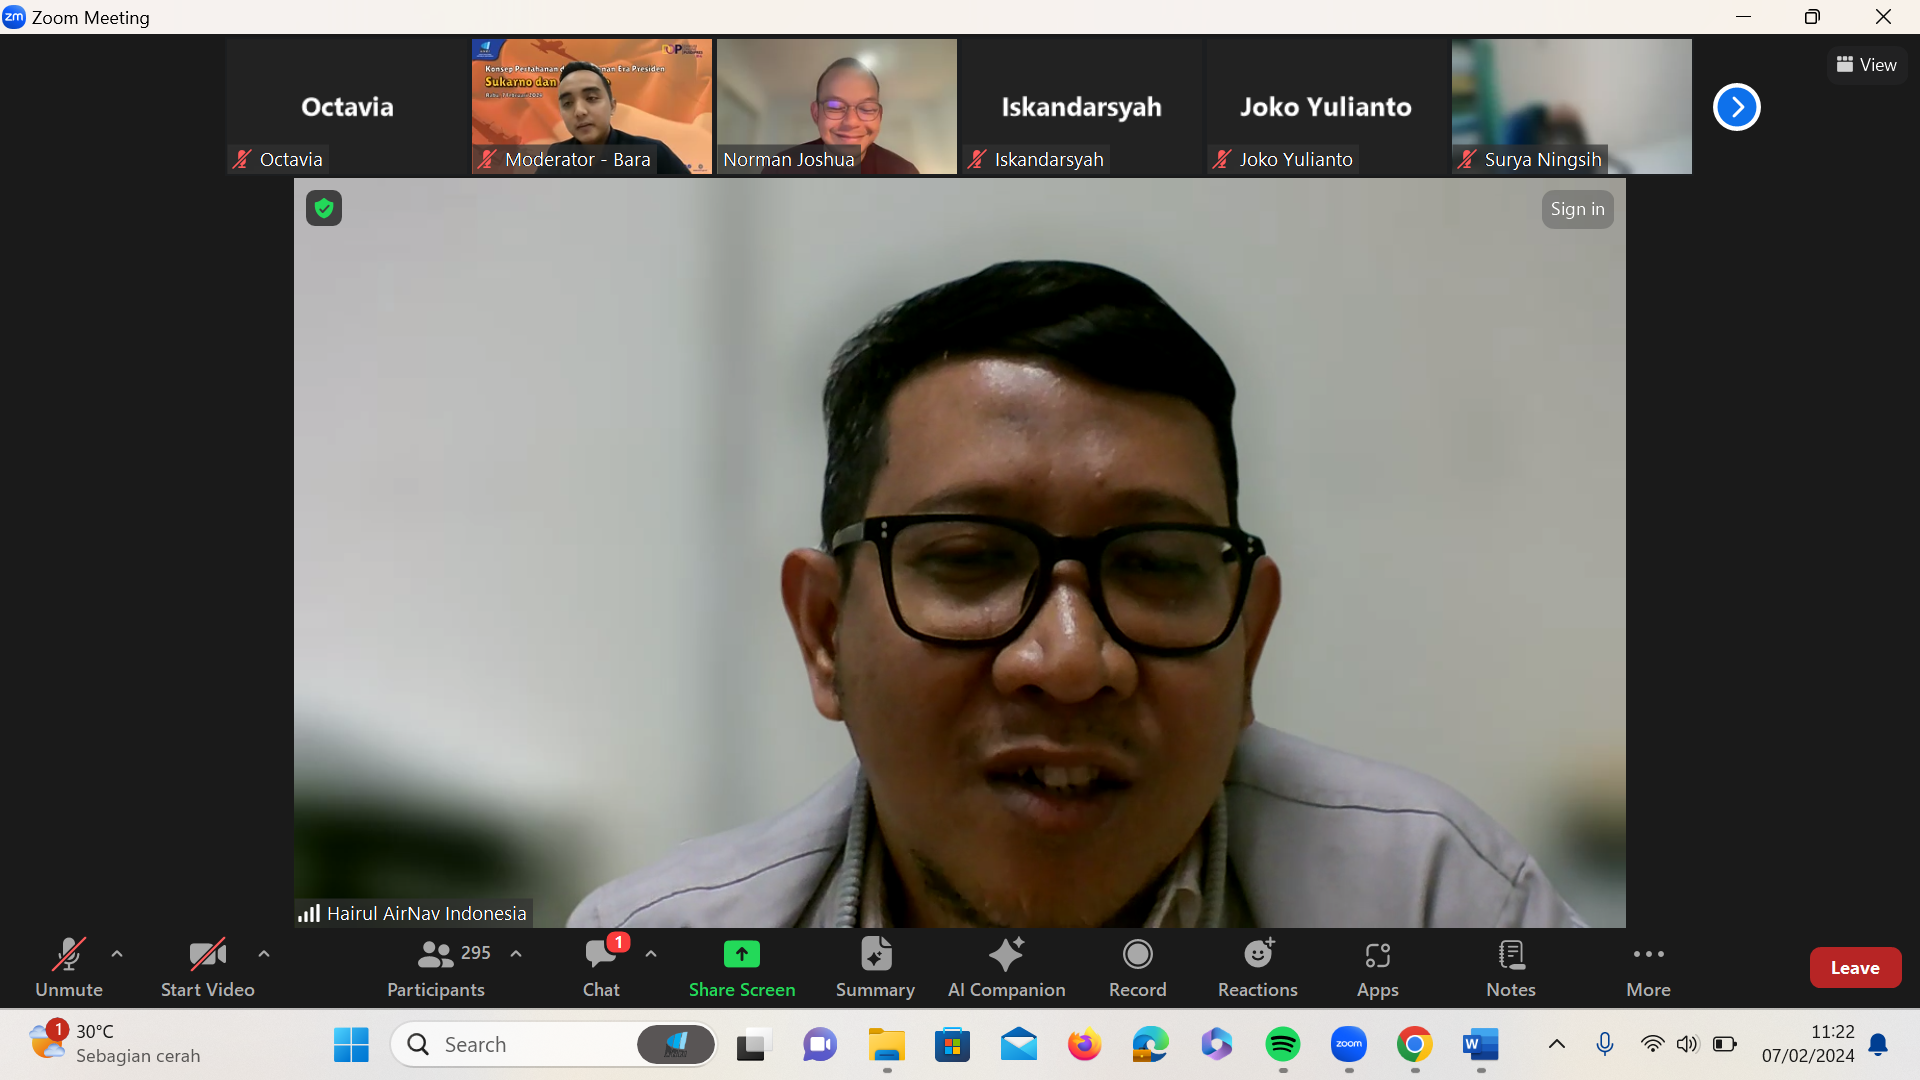 Diskusi Online Pusdipres Seri 4: Konsep Pertahanan dan Keamanan Era Presiden Sukarno dan Soeharto